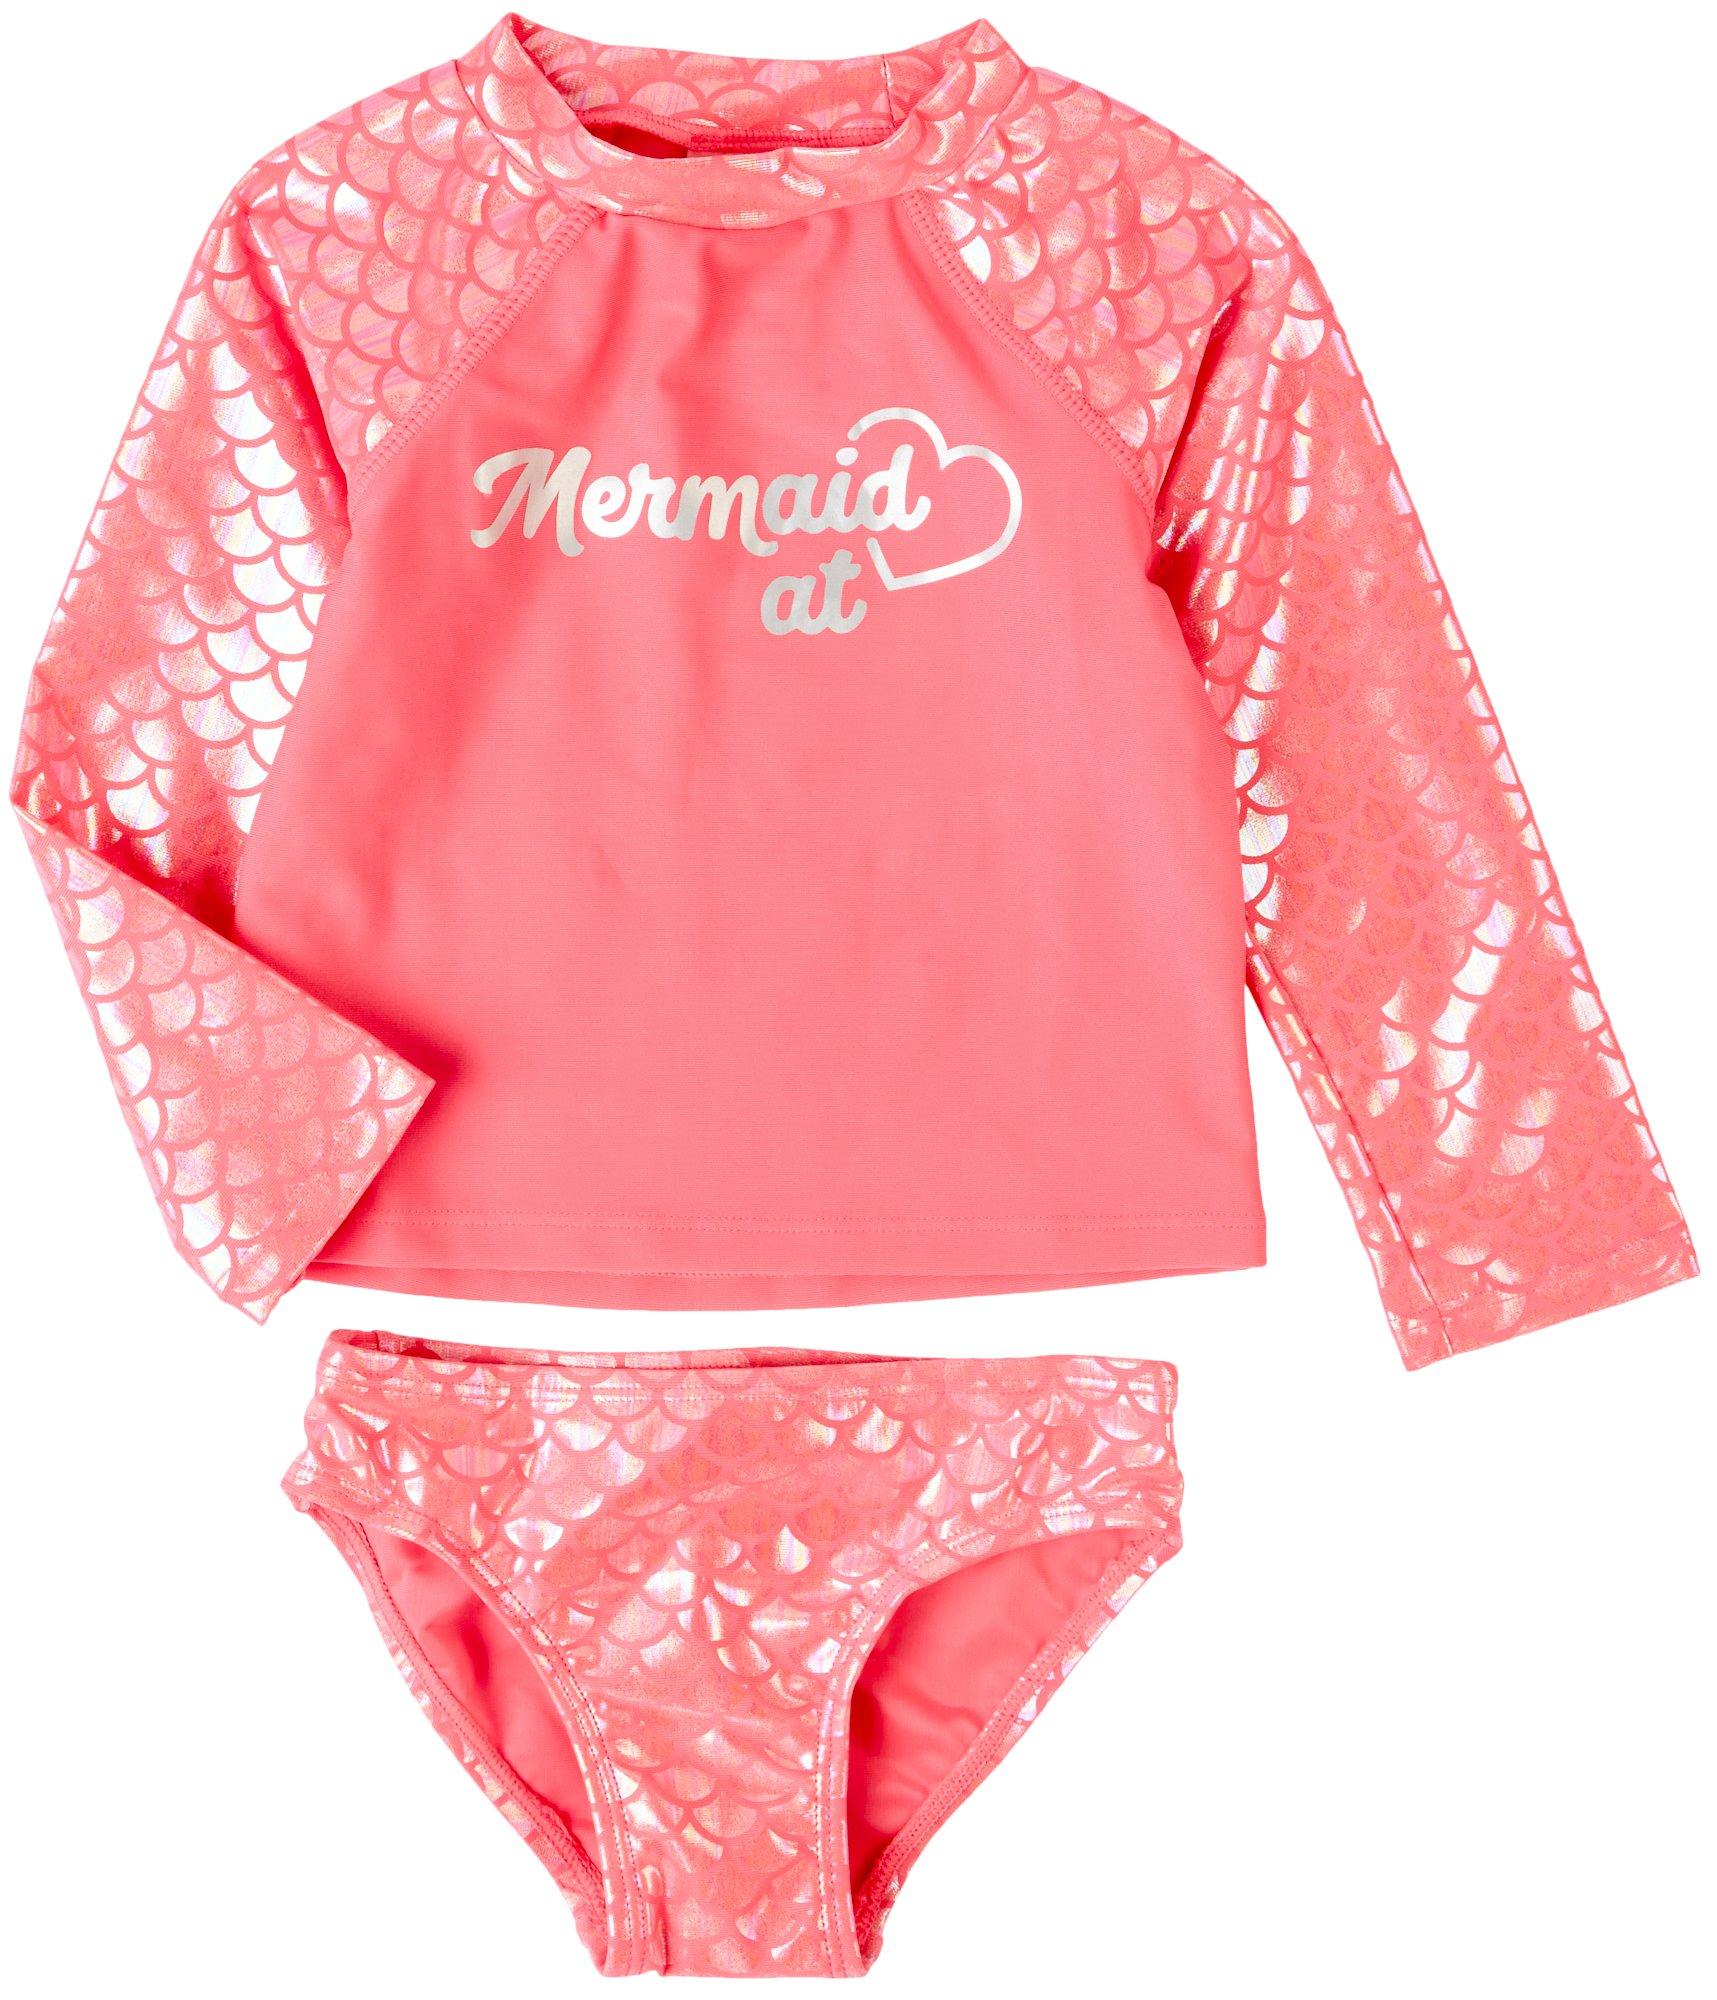 Floatimini Toddler Girls 2-pc. Mermaid Rashguard Swimsuit